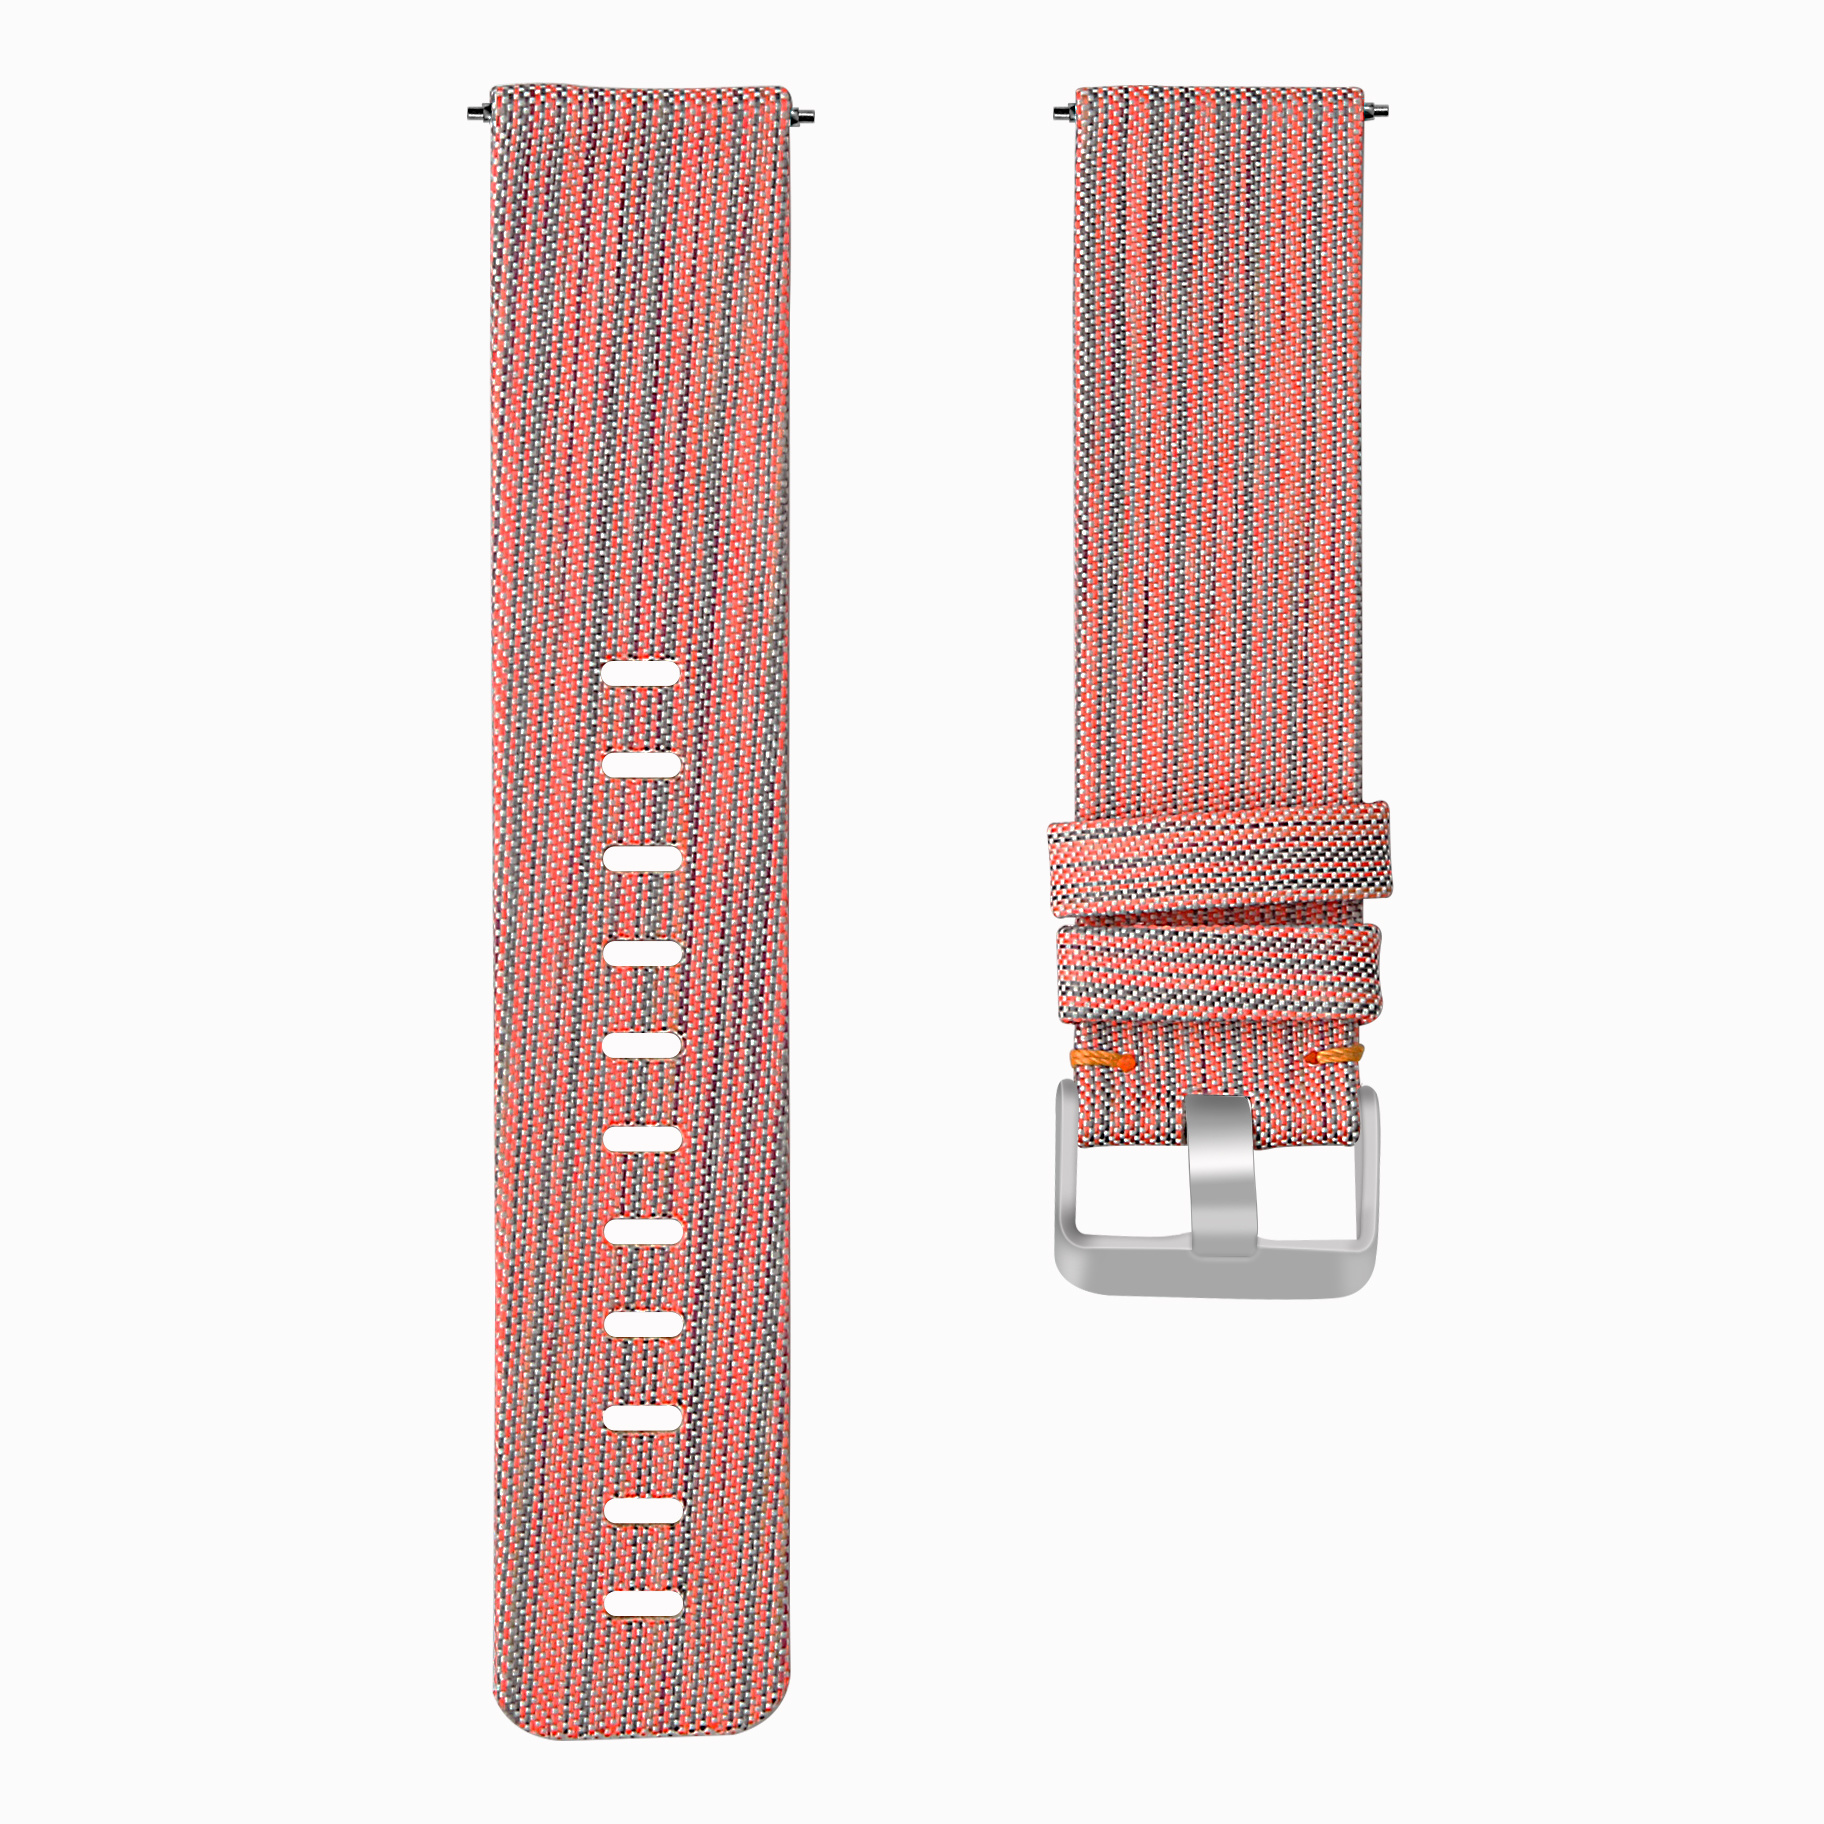 Fitbit Versa Nylon Buckle Strap - Orange Striped